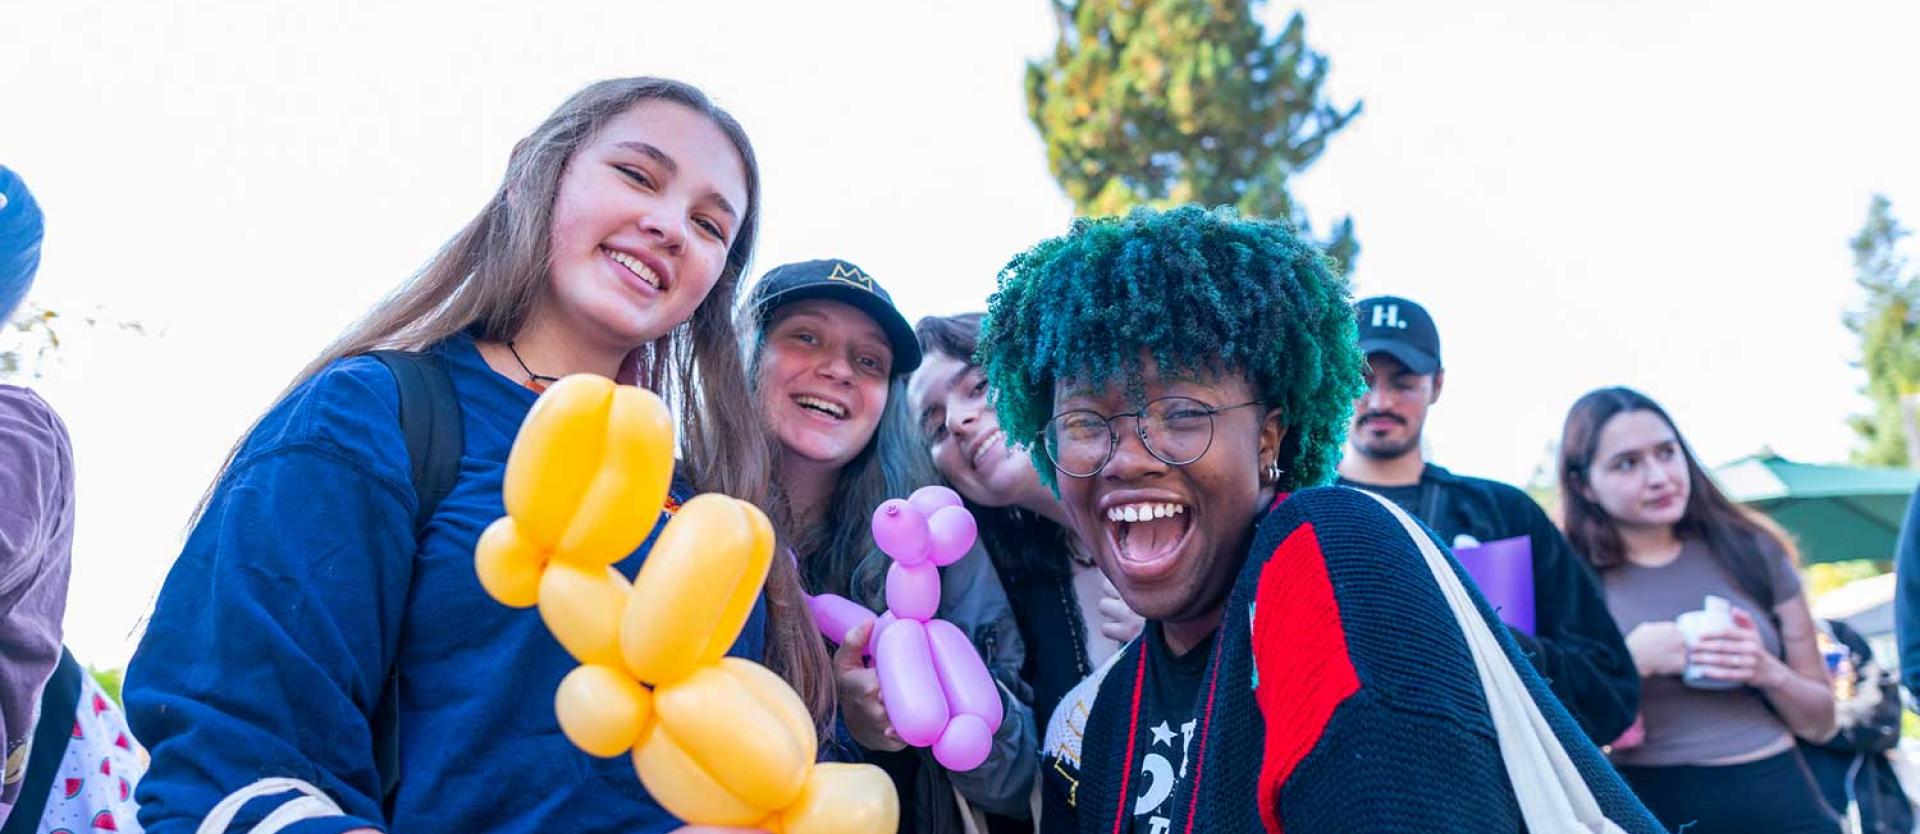 Students with ballon animals